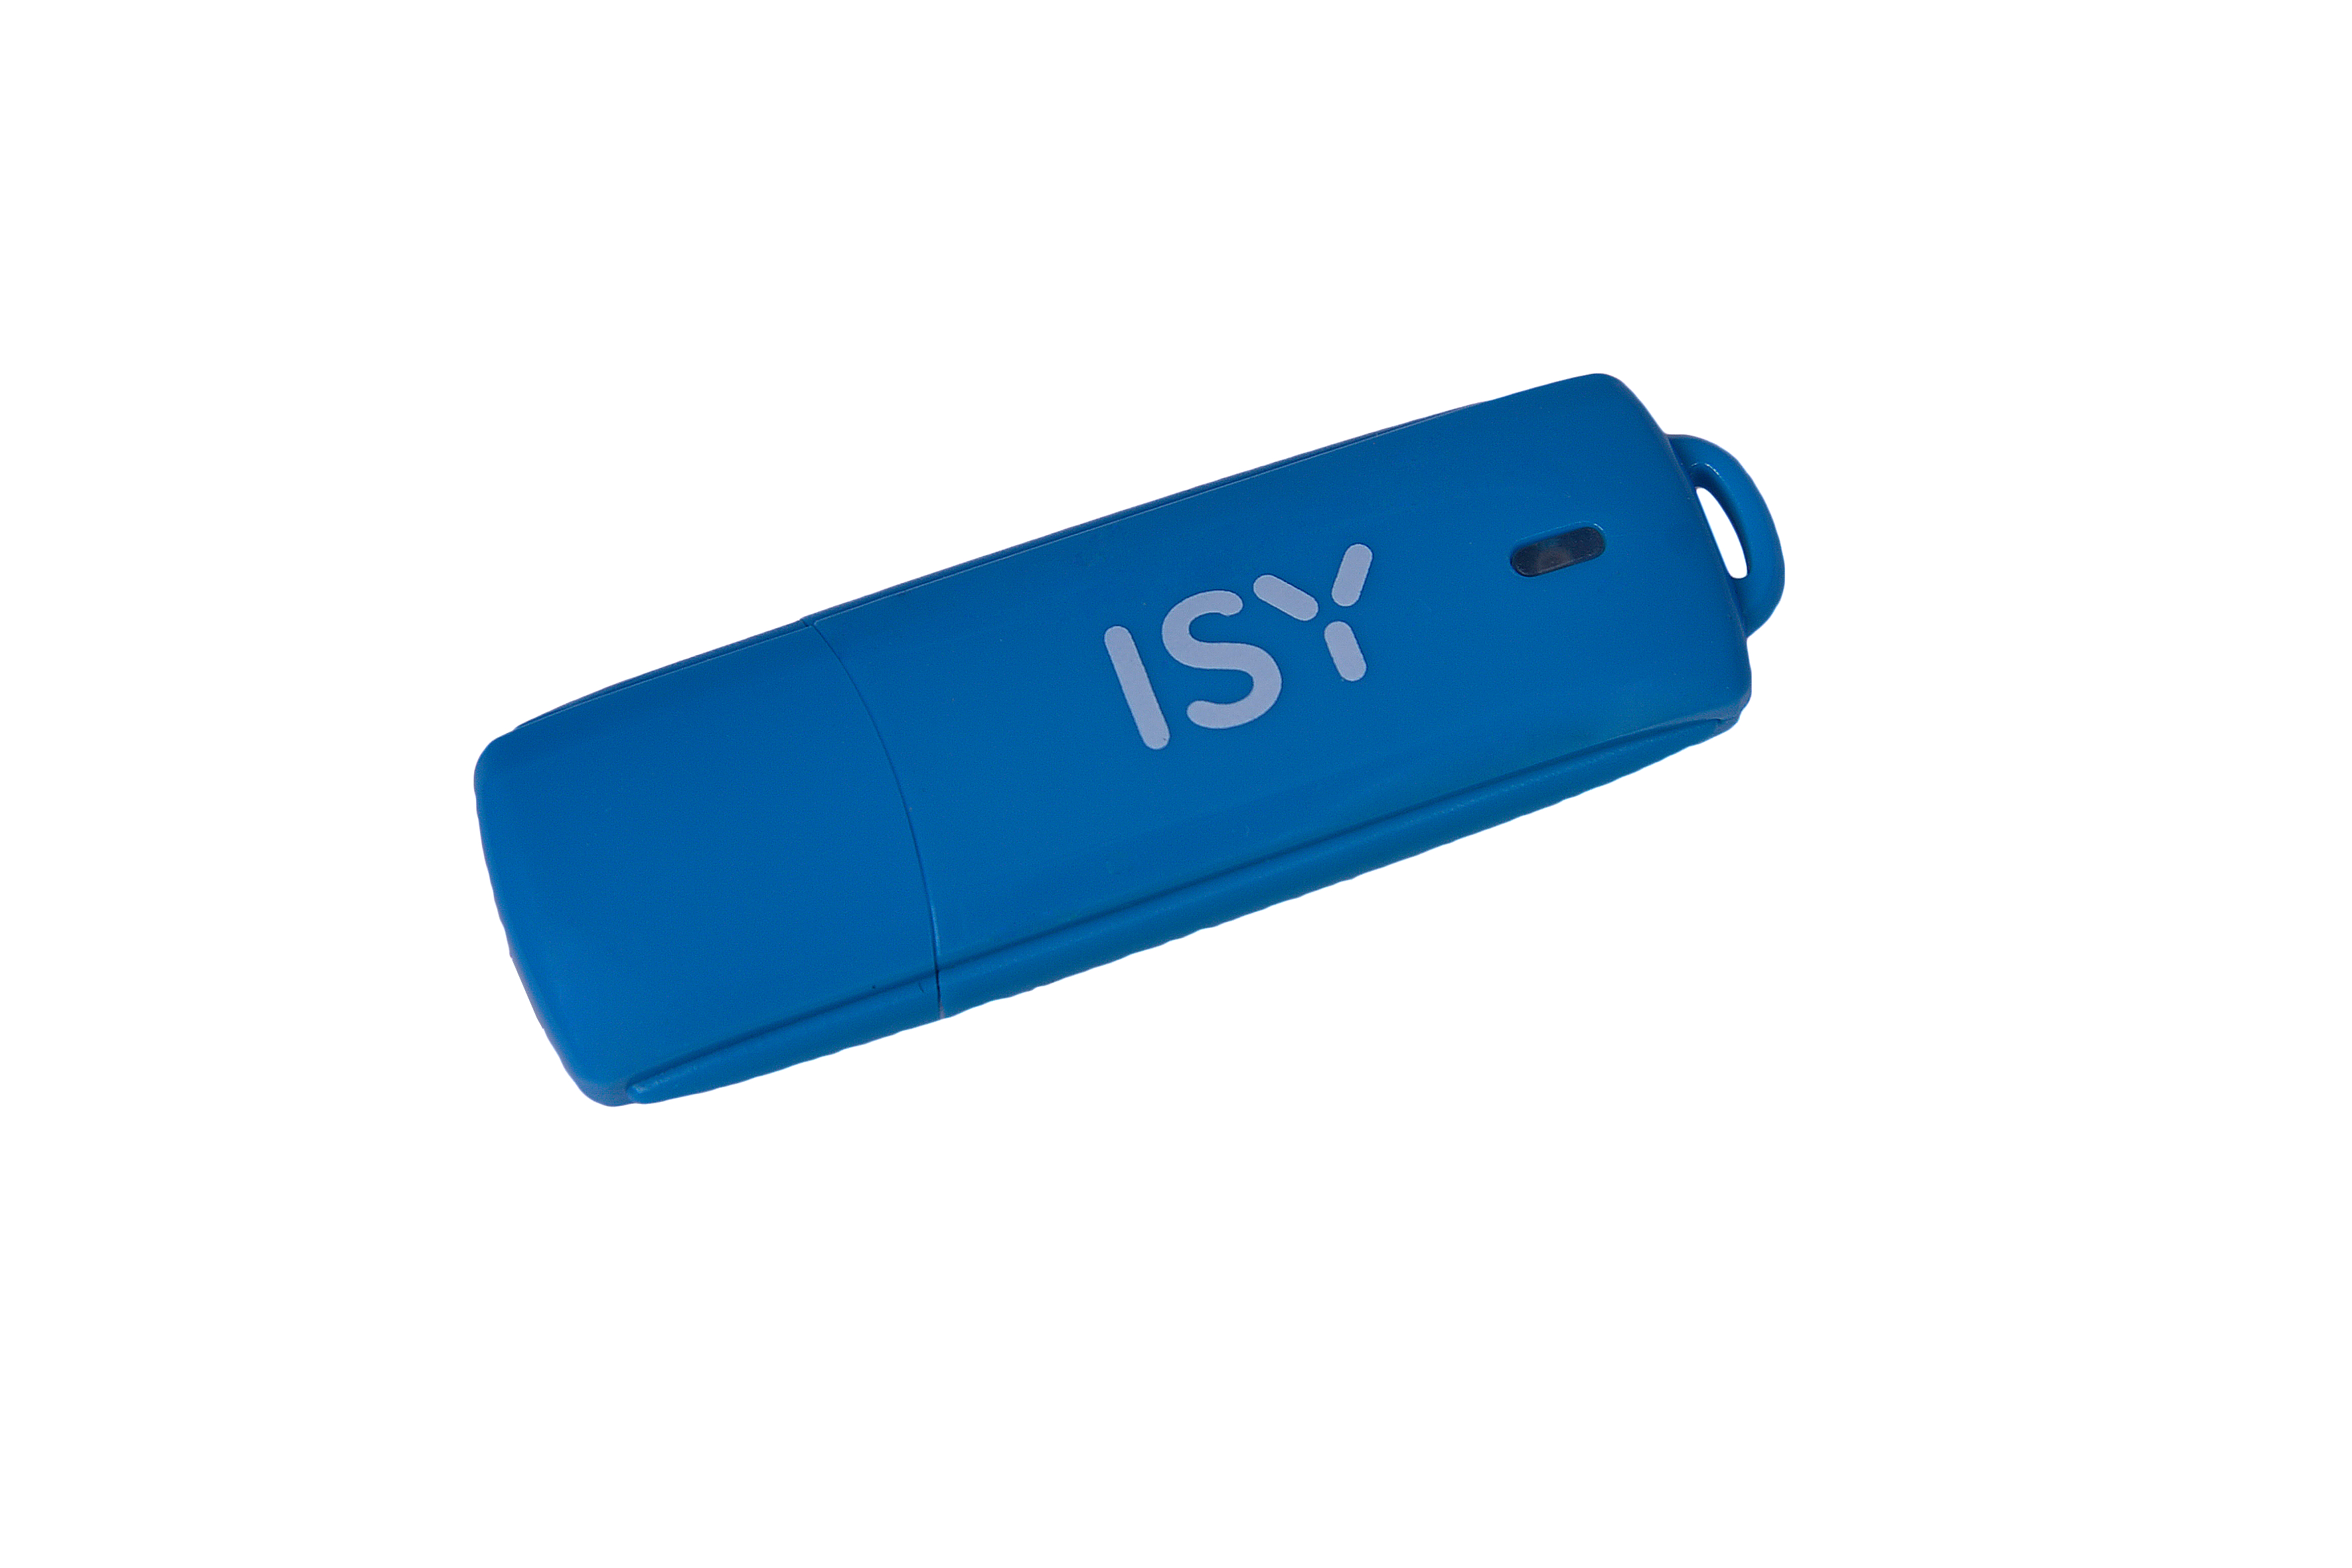 ISY IMU-2300-NEON USB-Stick, Neon-Blau, Neon-Pink GB, Neon-Orange, 4 MB/s, Neon-Grün, 64